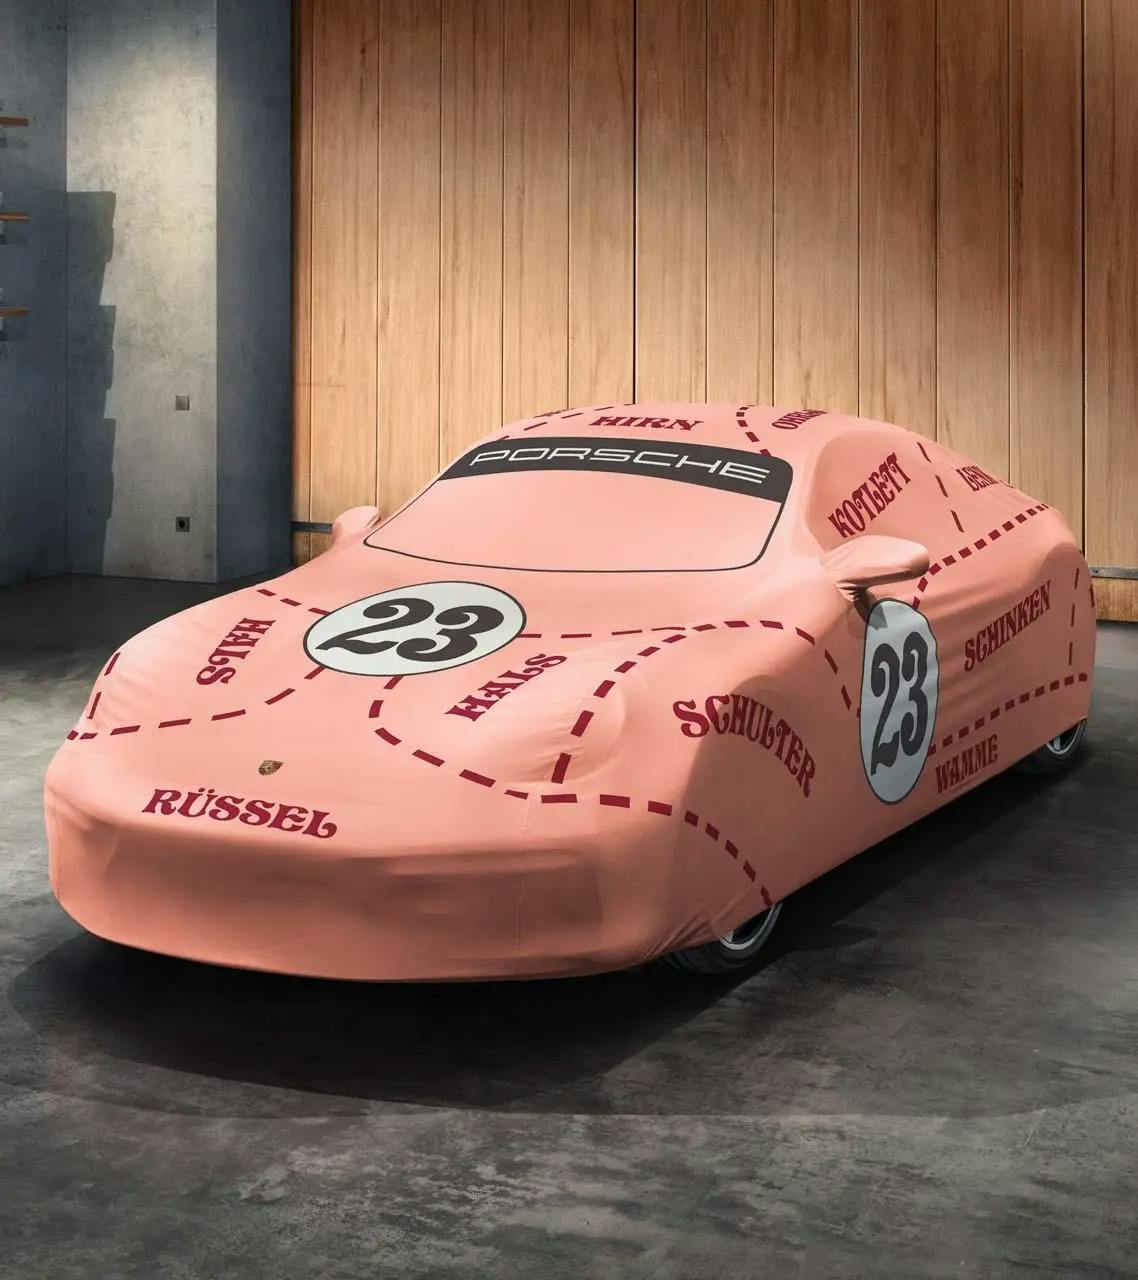 Indoor car cover "Pink Pig" design - 911 (992 Turbo) 1